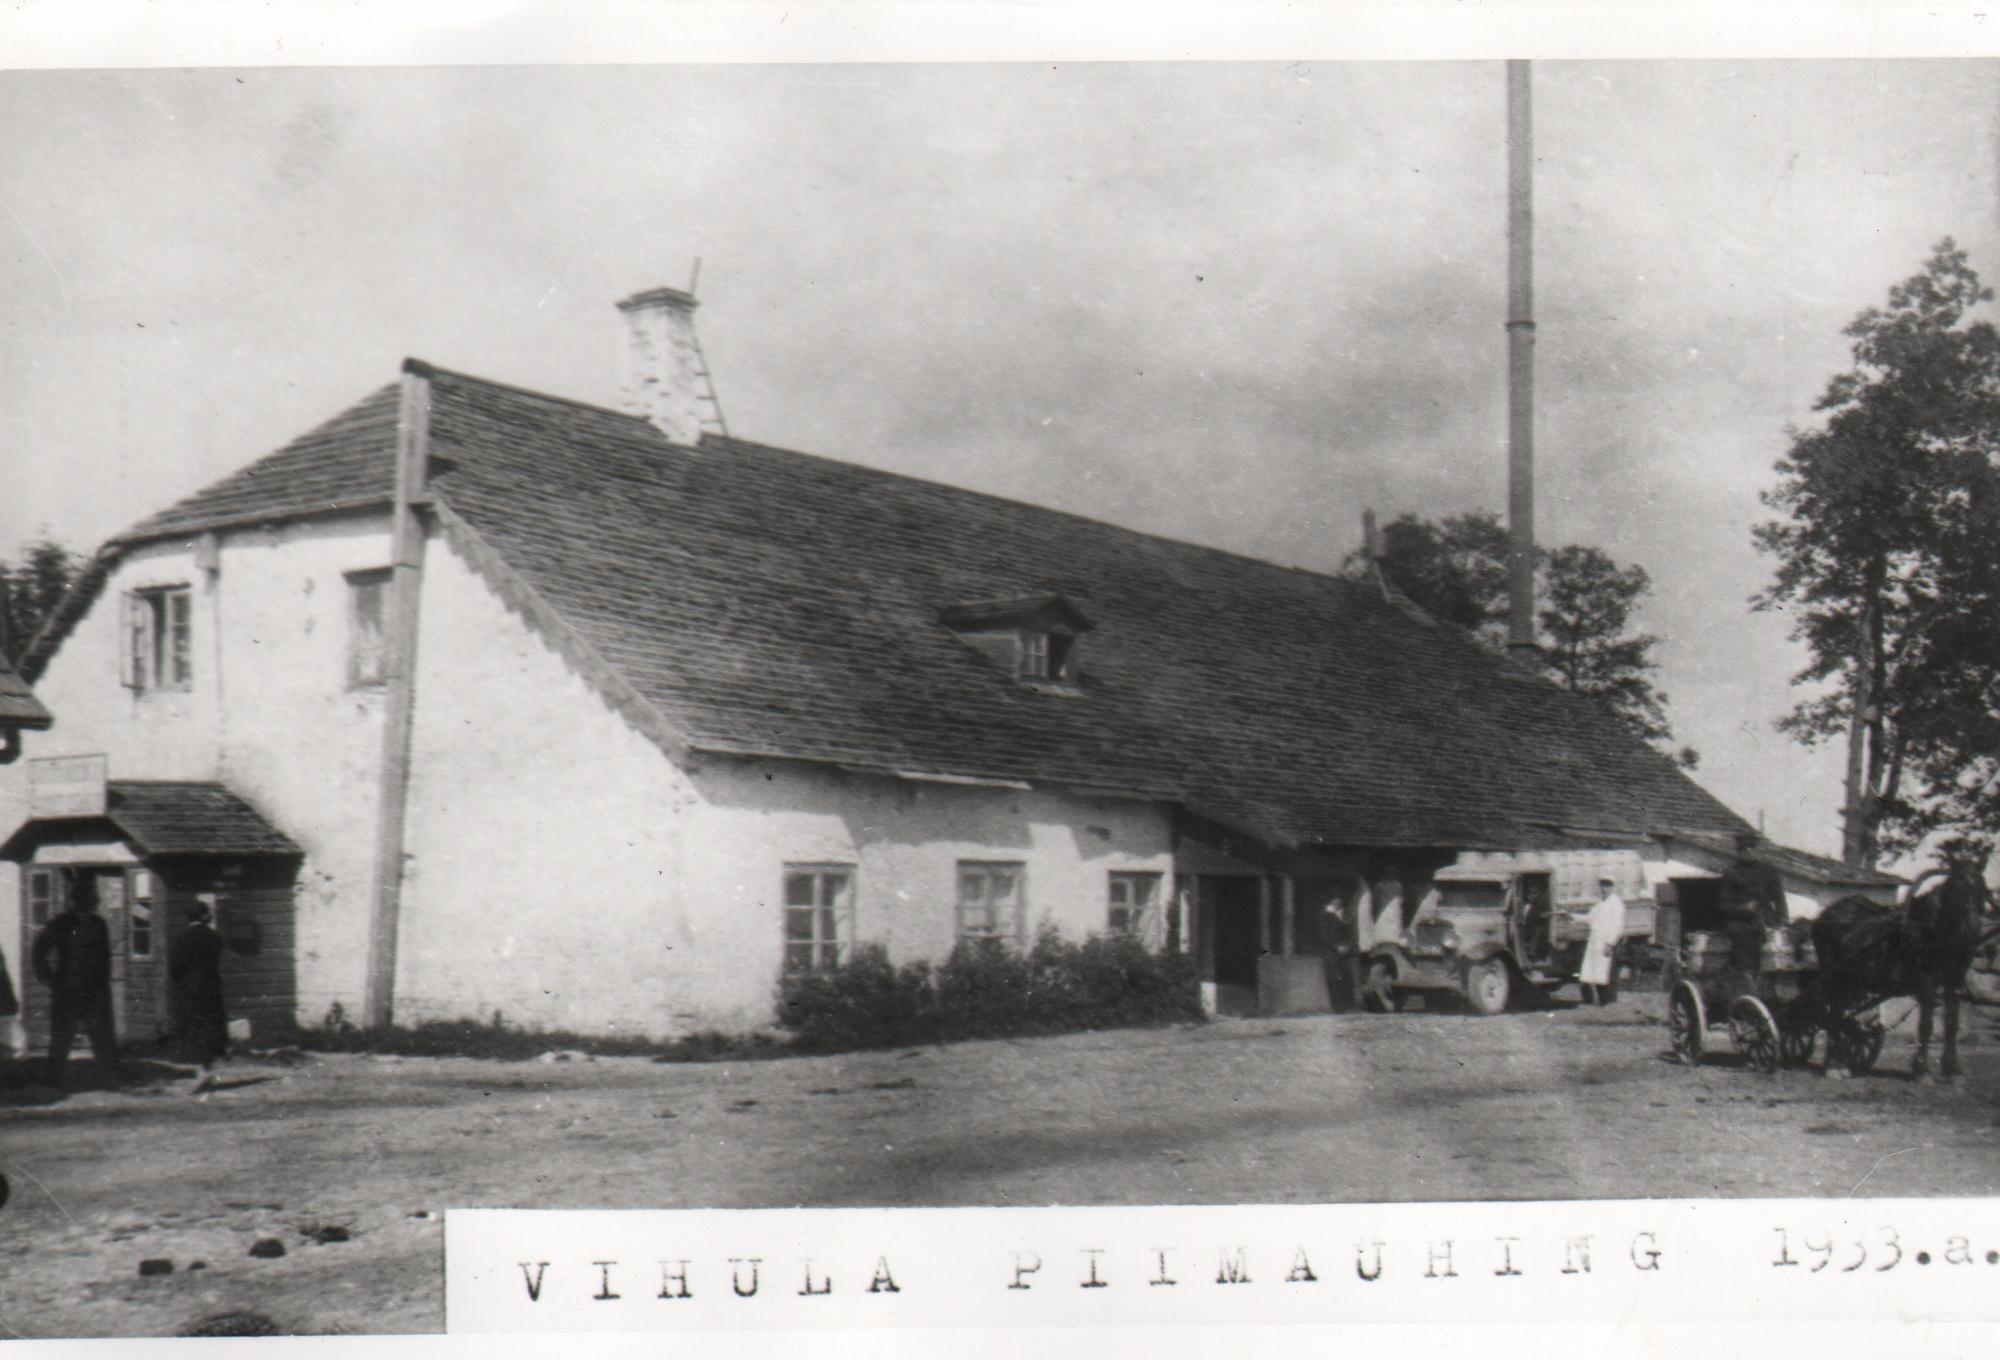 Vihula Milk Association House, 1933.